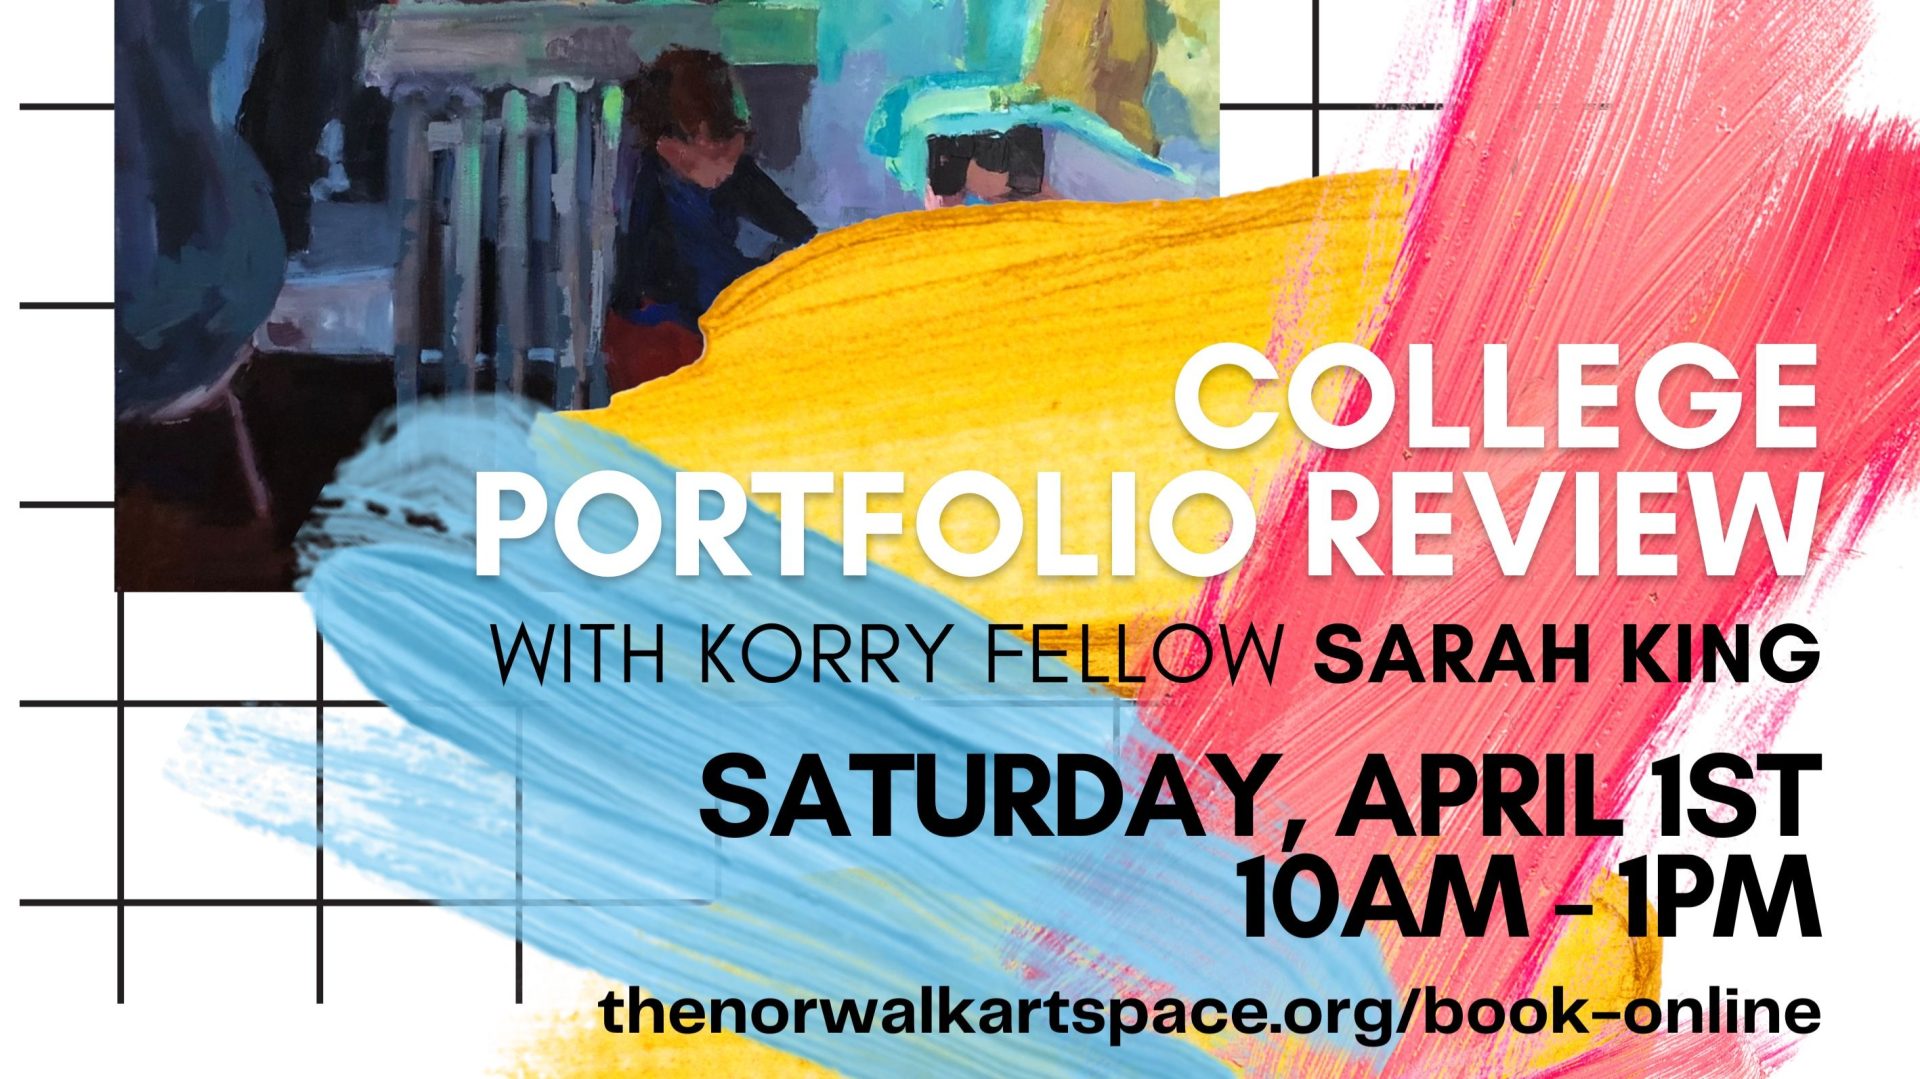 College Portfolio Review with Korry Fellow Sarah King